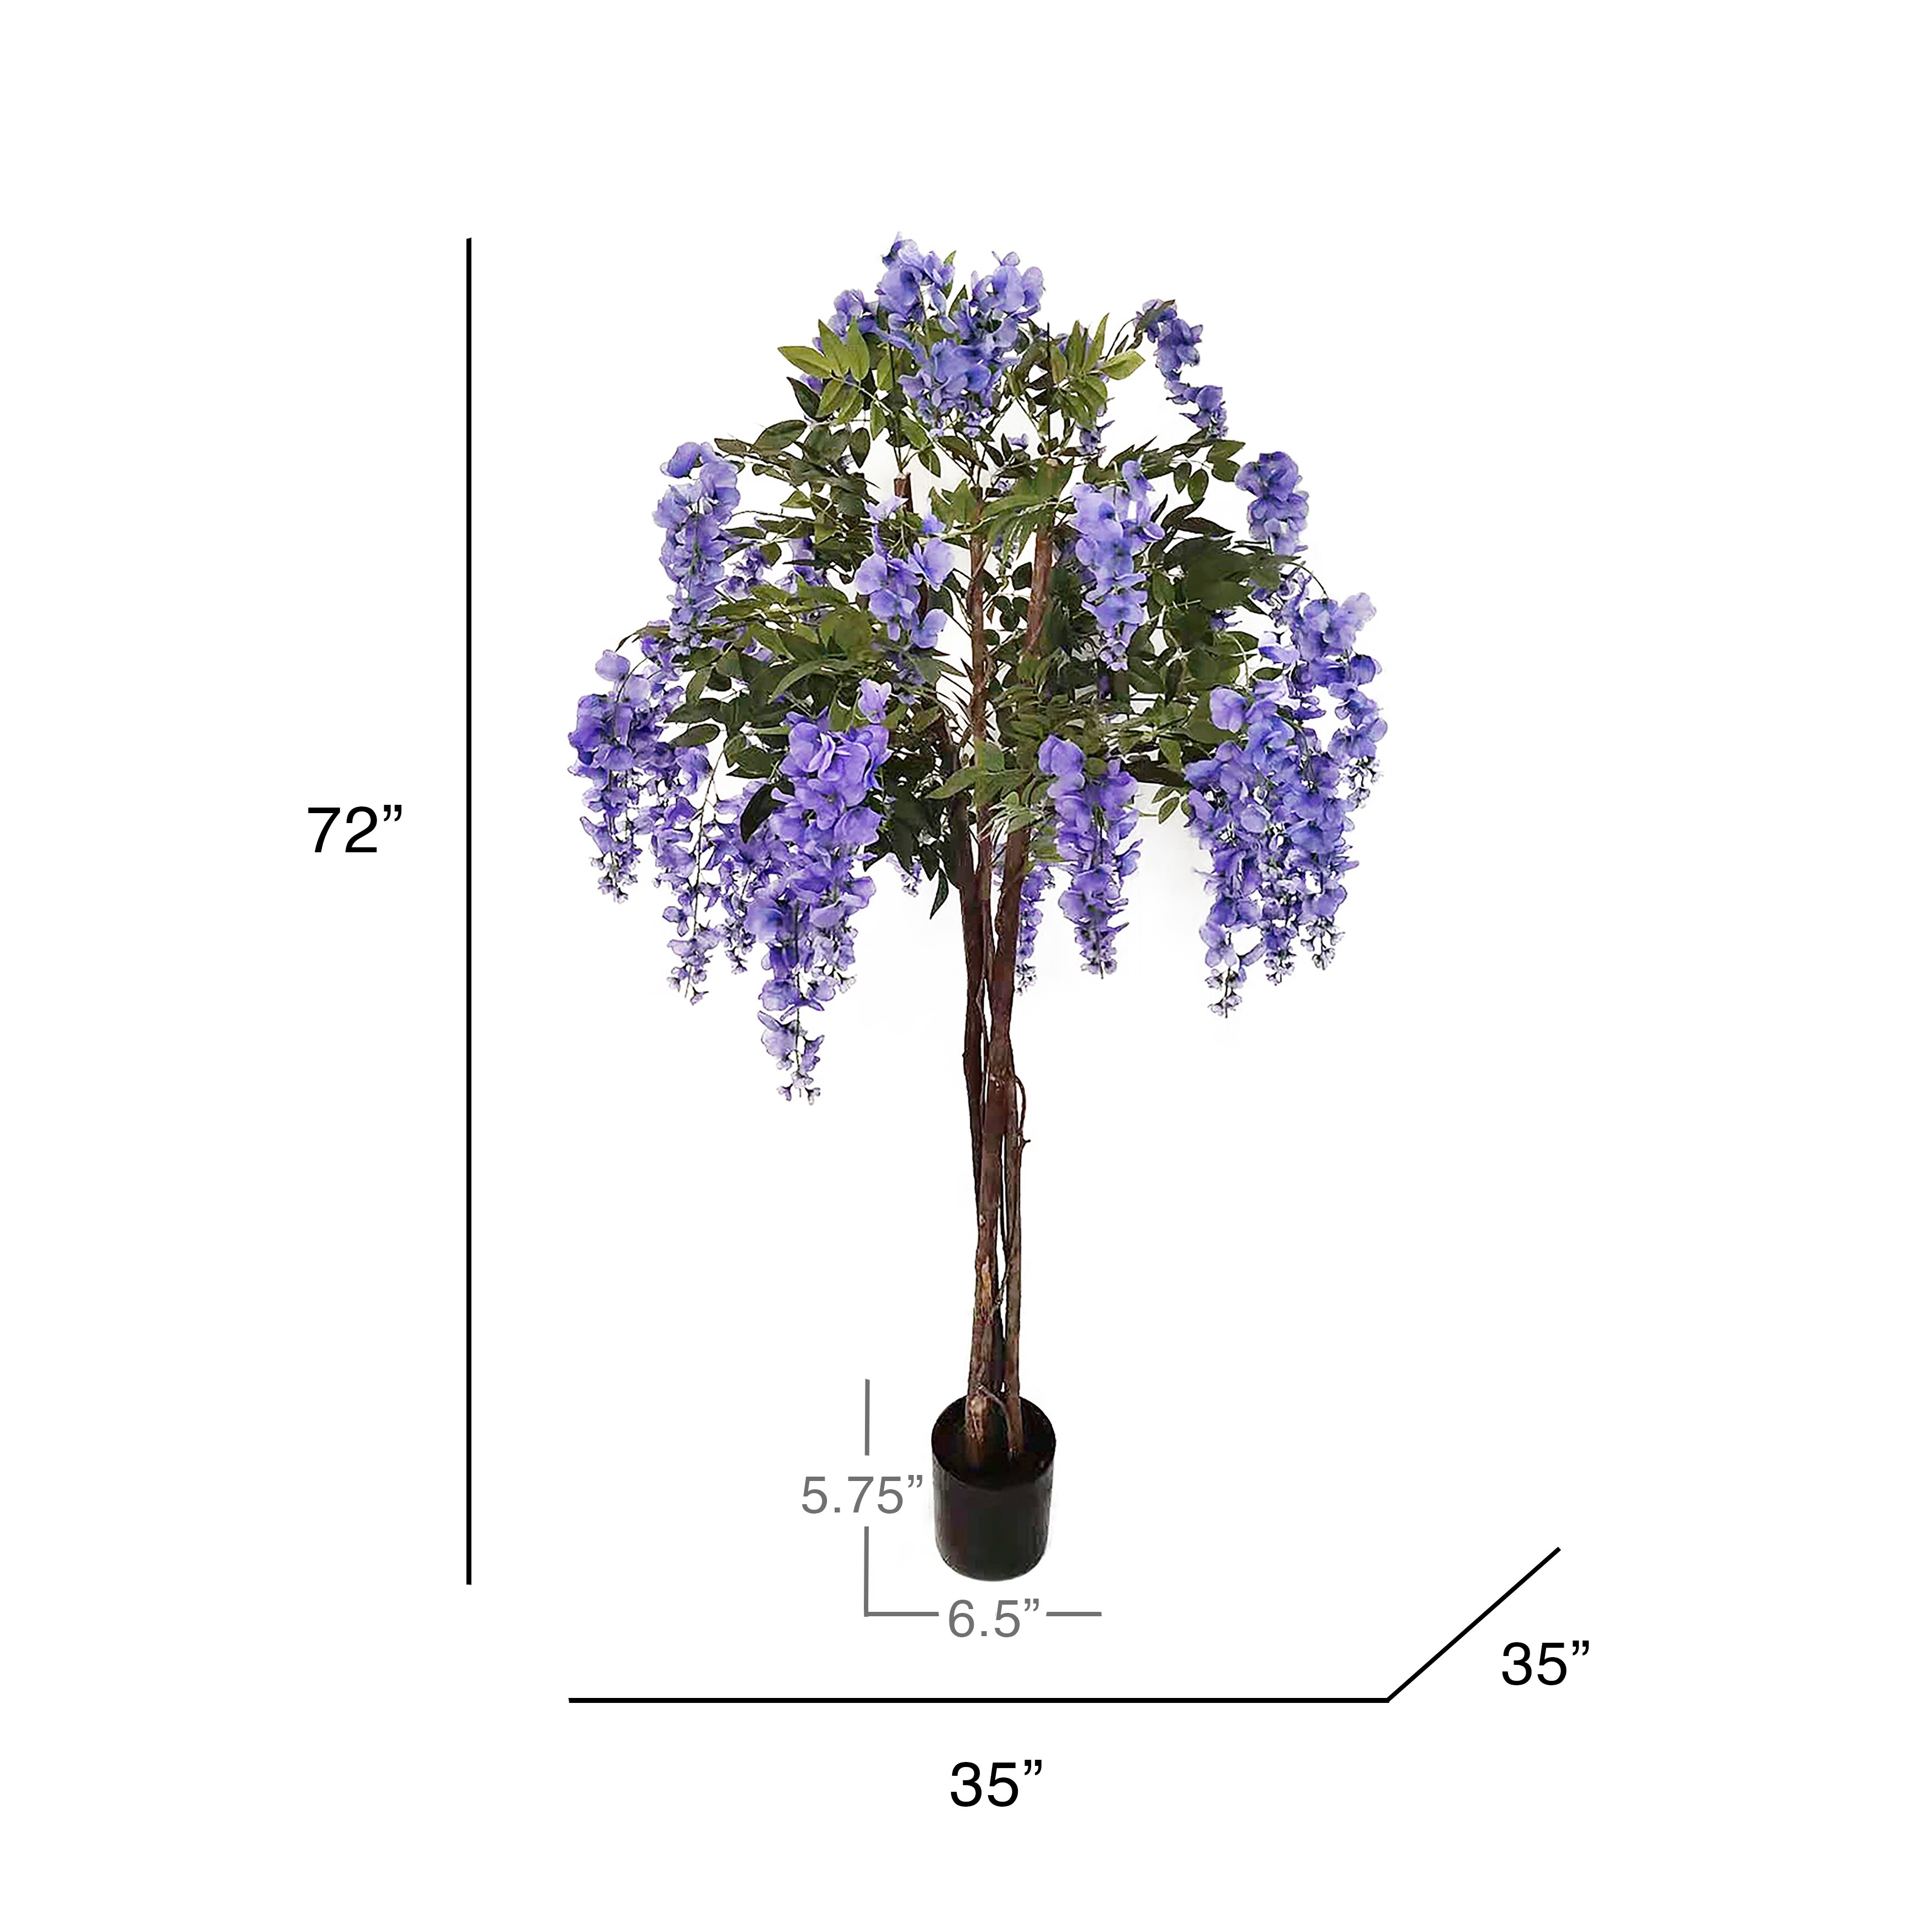 6ft Purple Wisteria Flower Tree In Pot 72 H X 35 W X 35 Dp Overstock